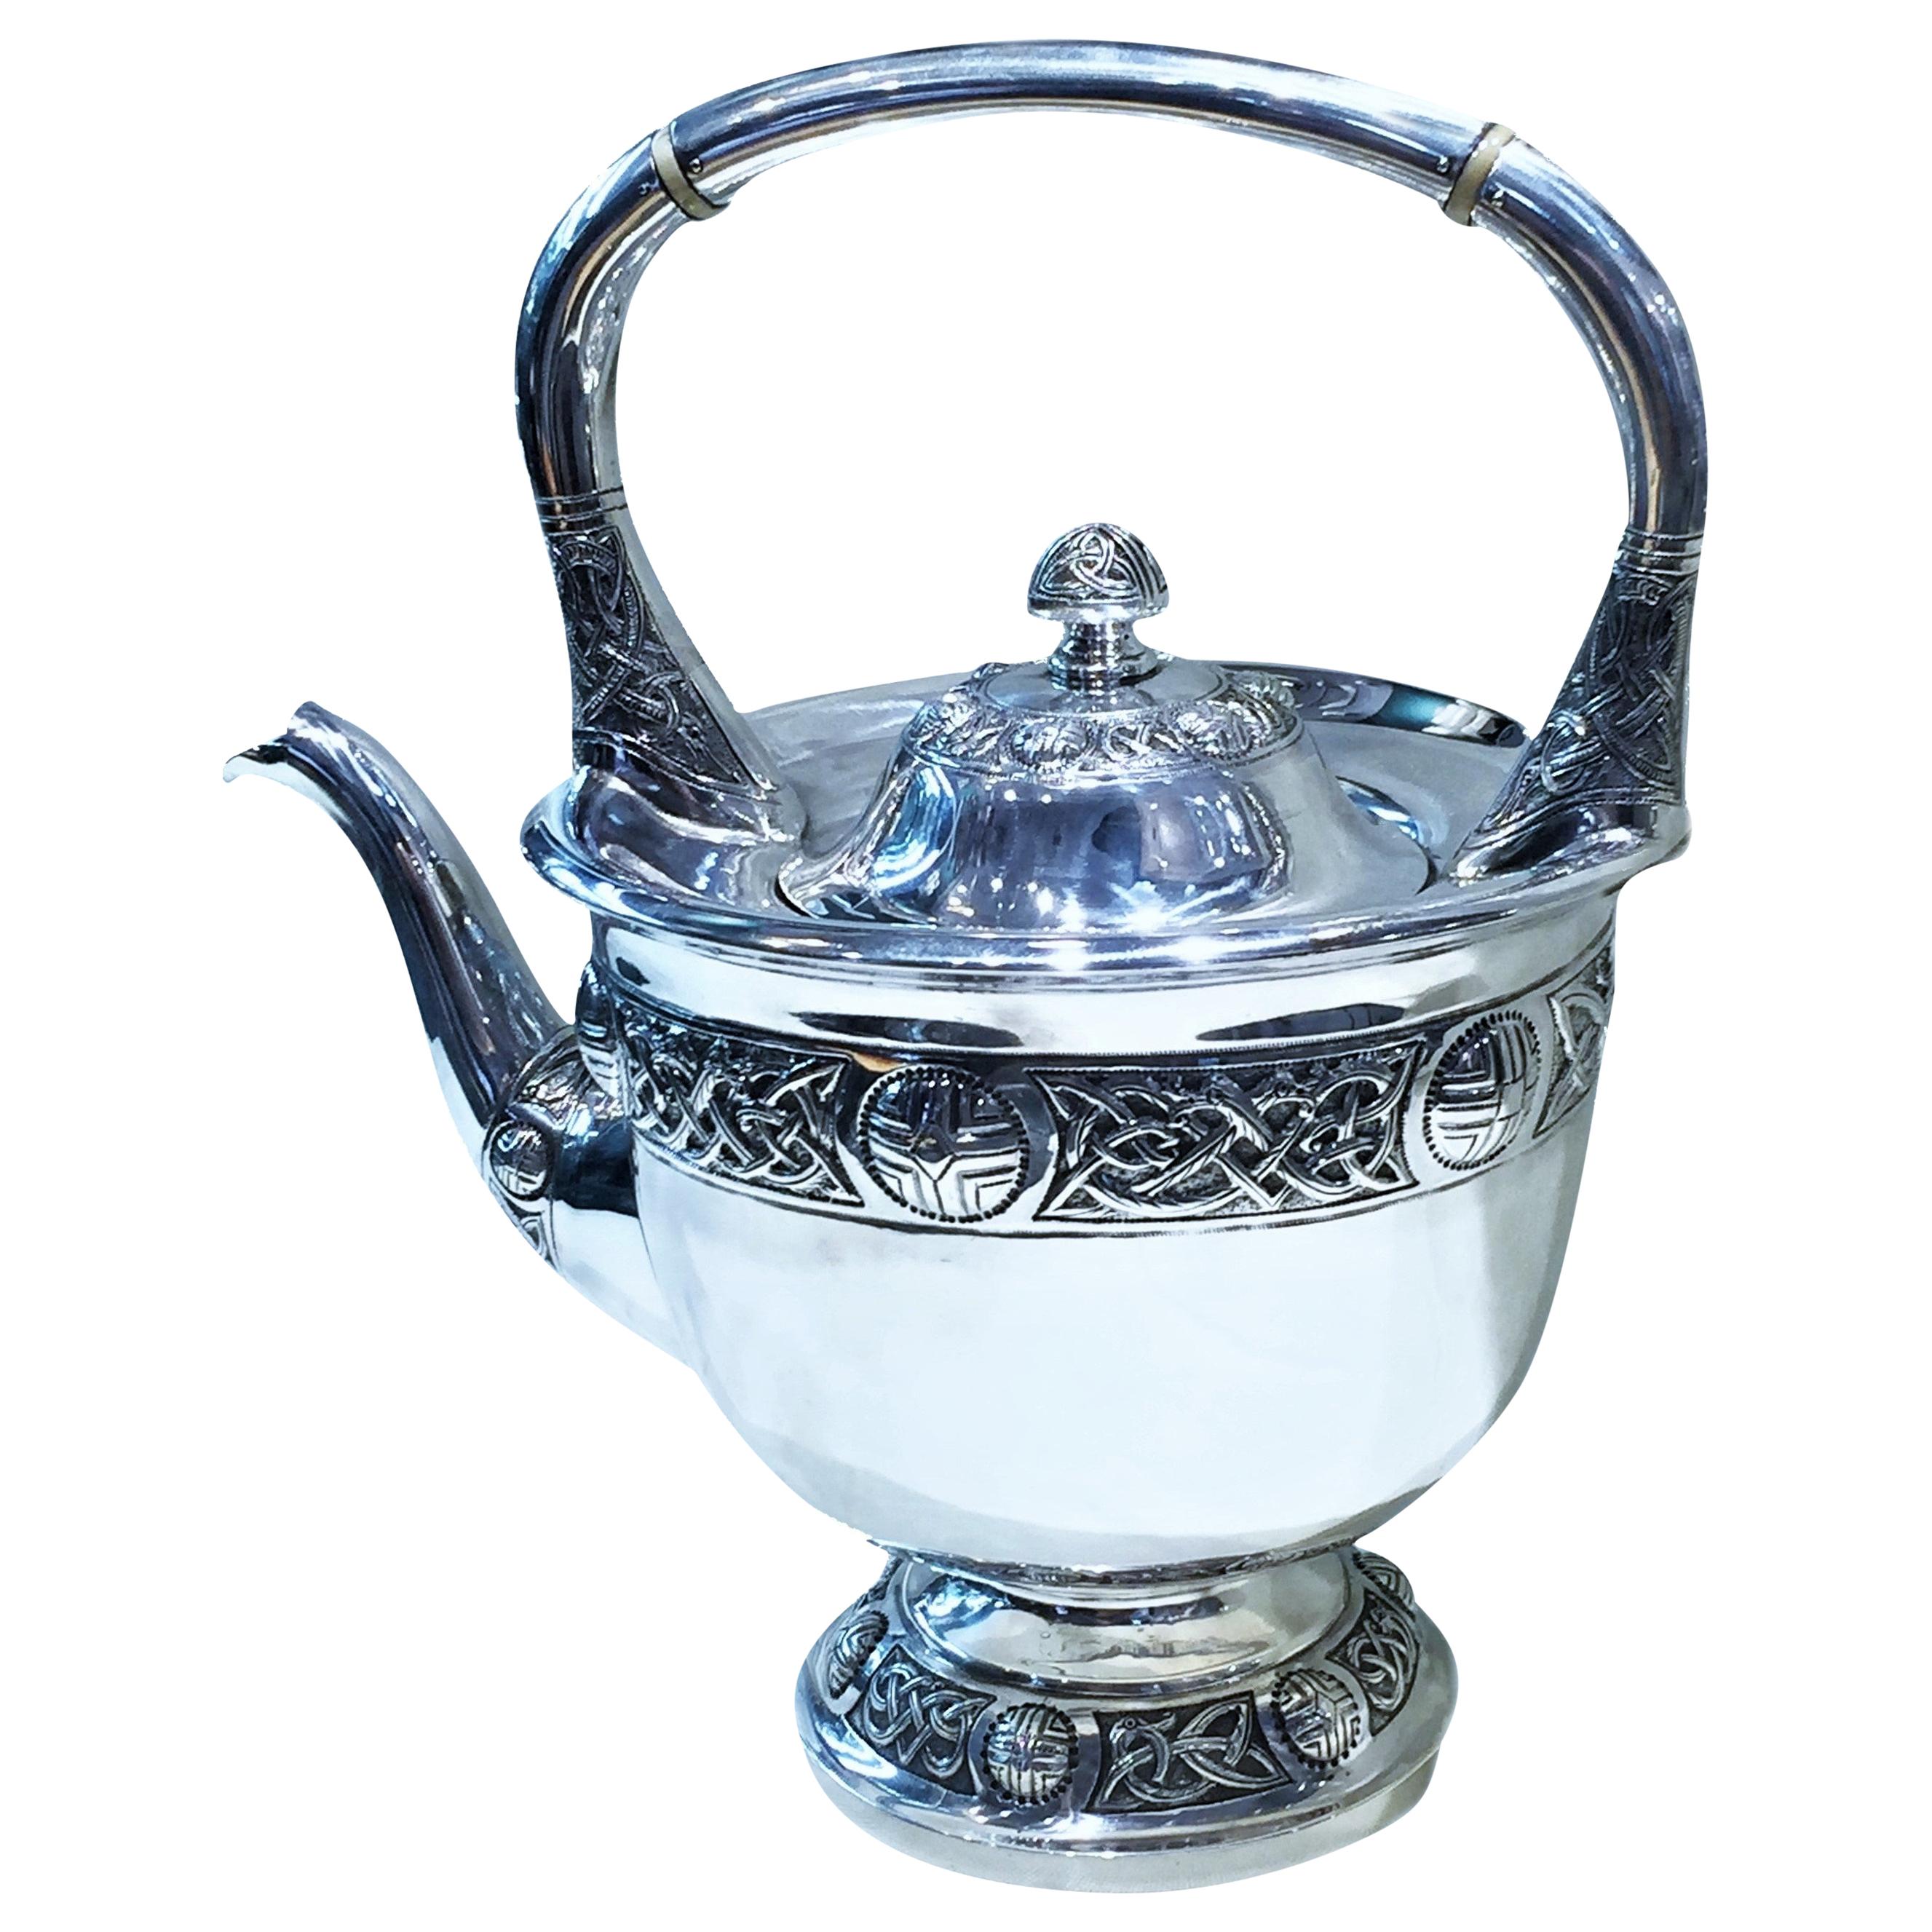 Antique Irish Silver Teapot with Celtic Tracery, circa 1900s